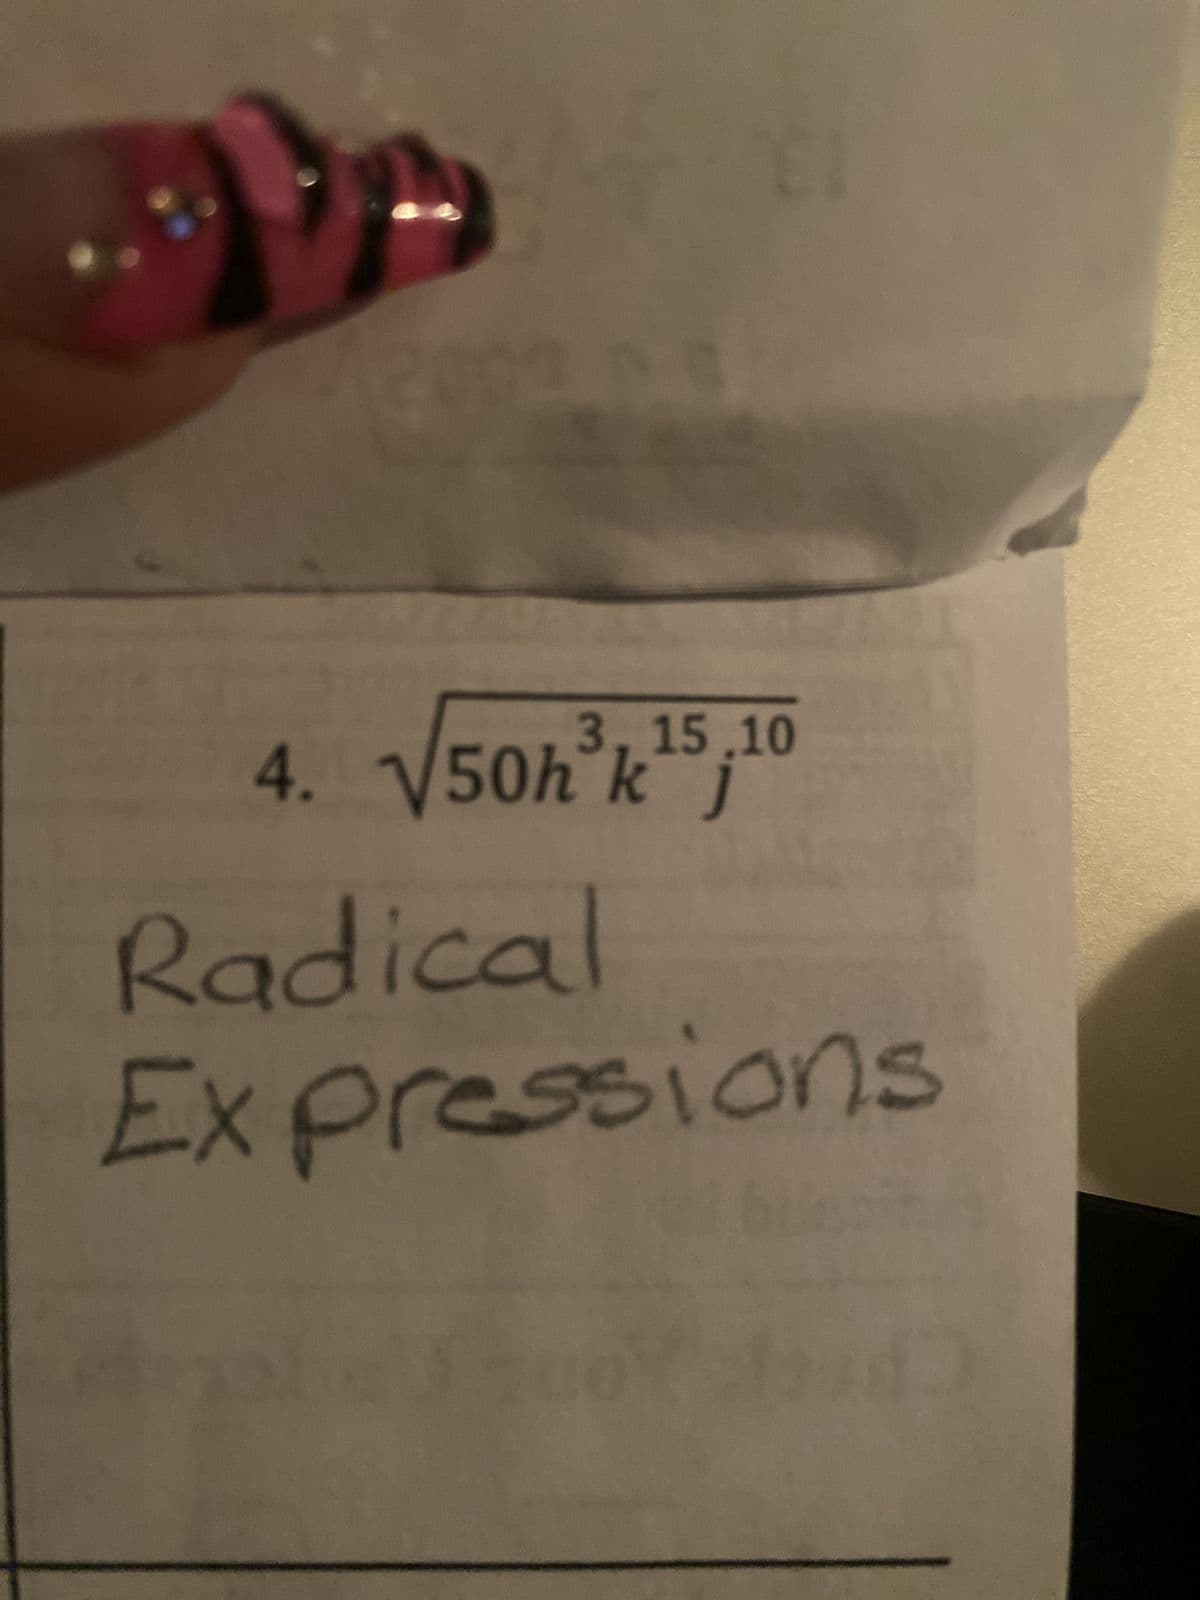 €1
3, 15,10
4. √50h³kj
Radical
Expressions